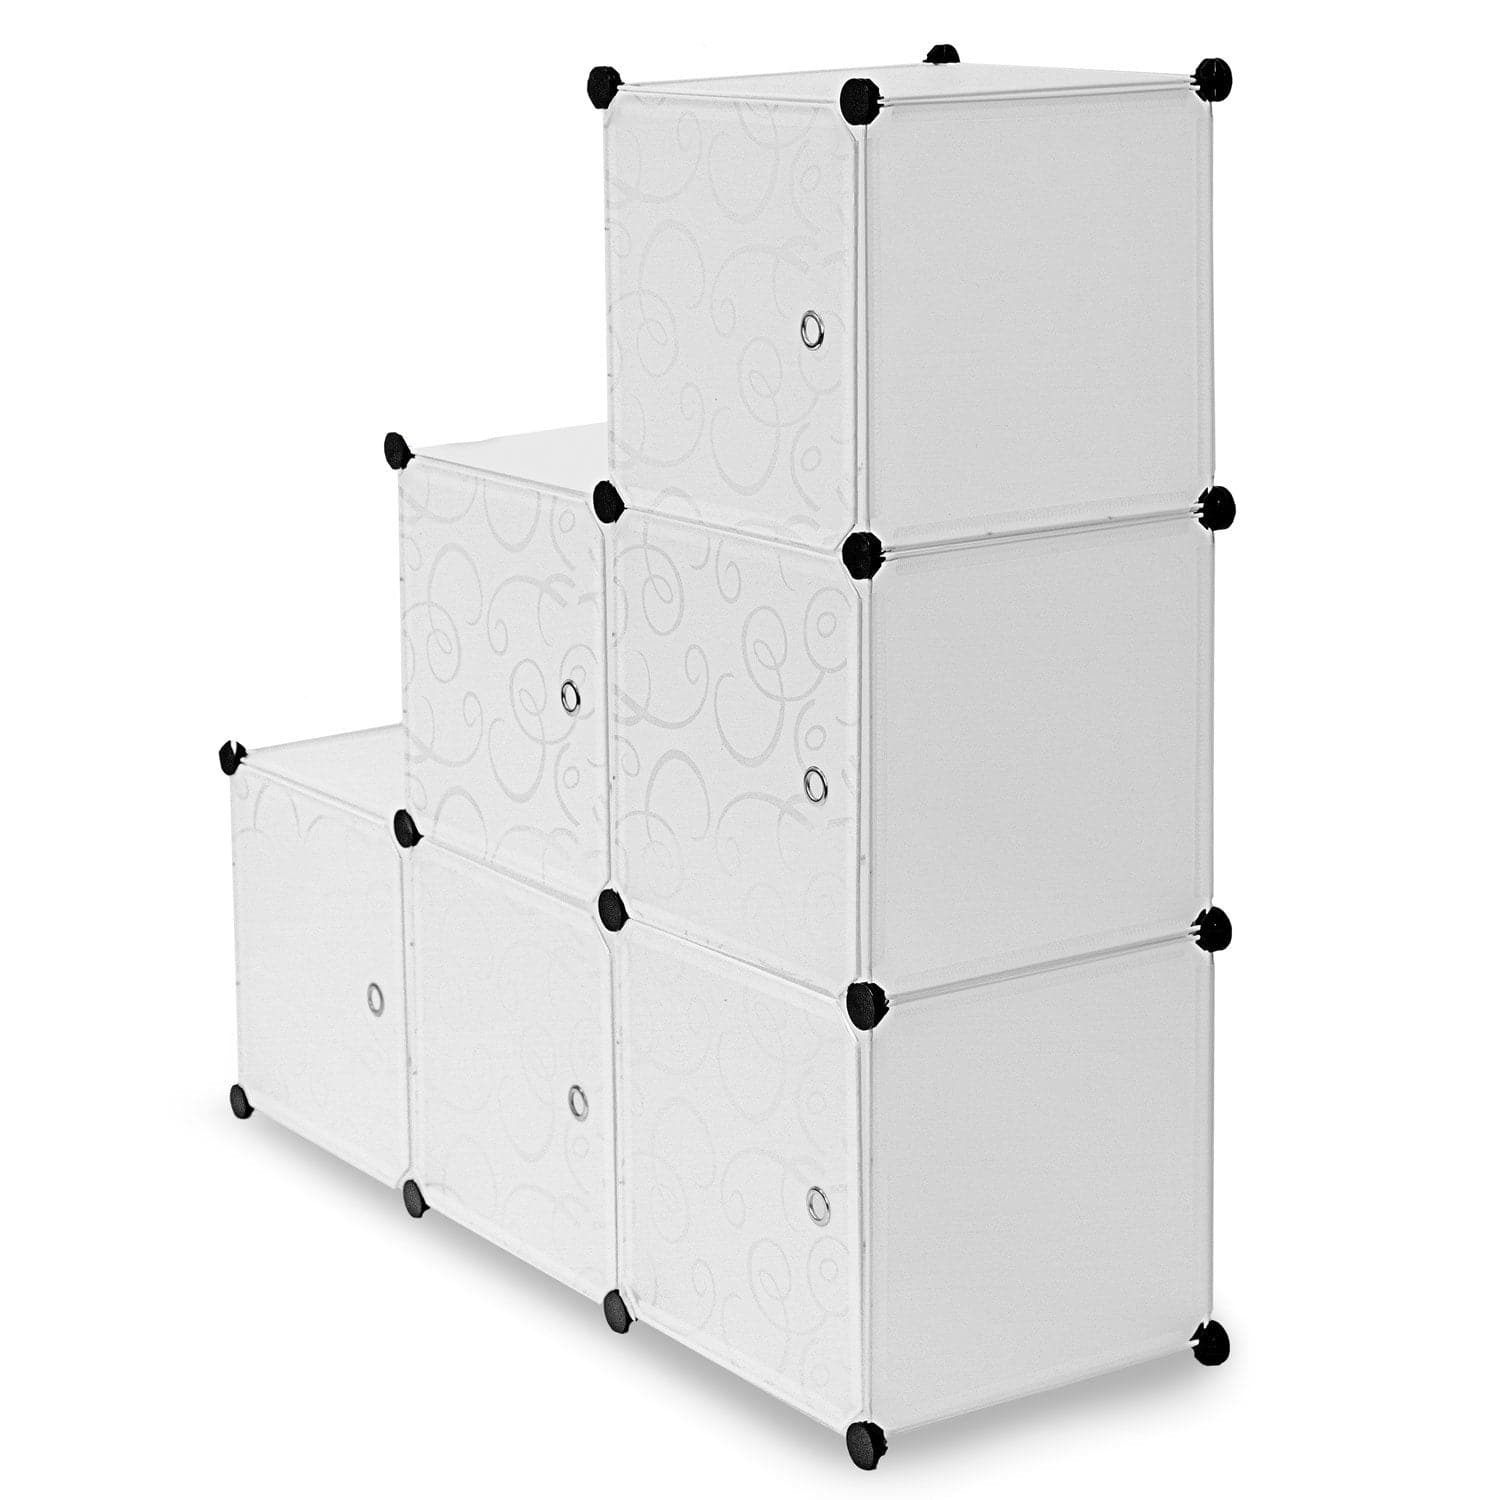 Modular Cube Storage Organizer - Mount-It!